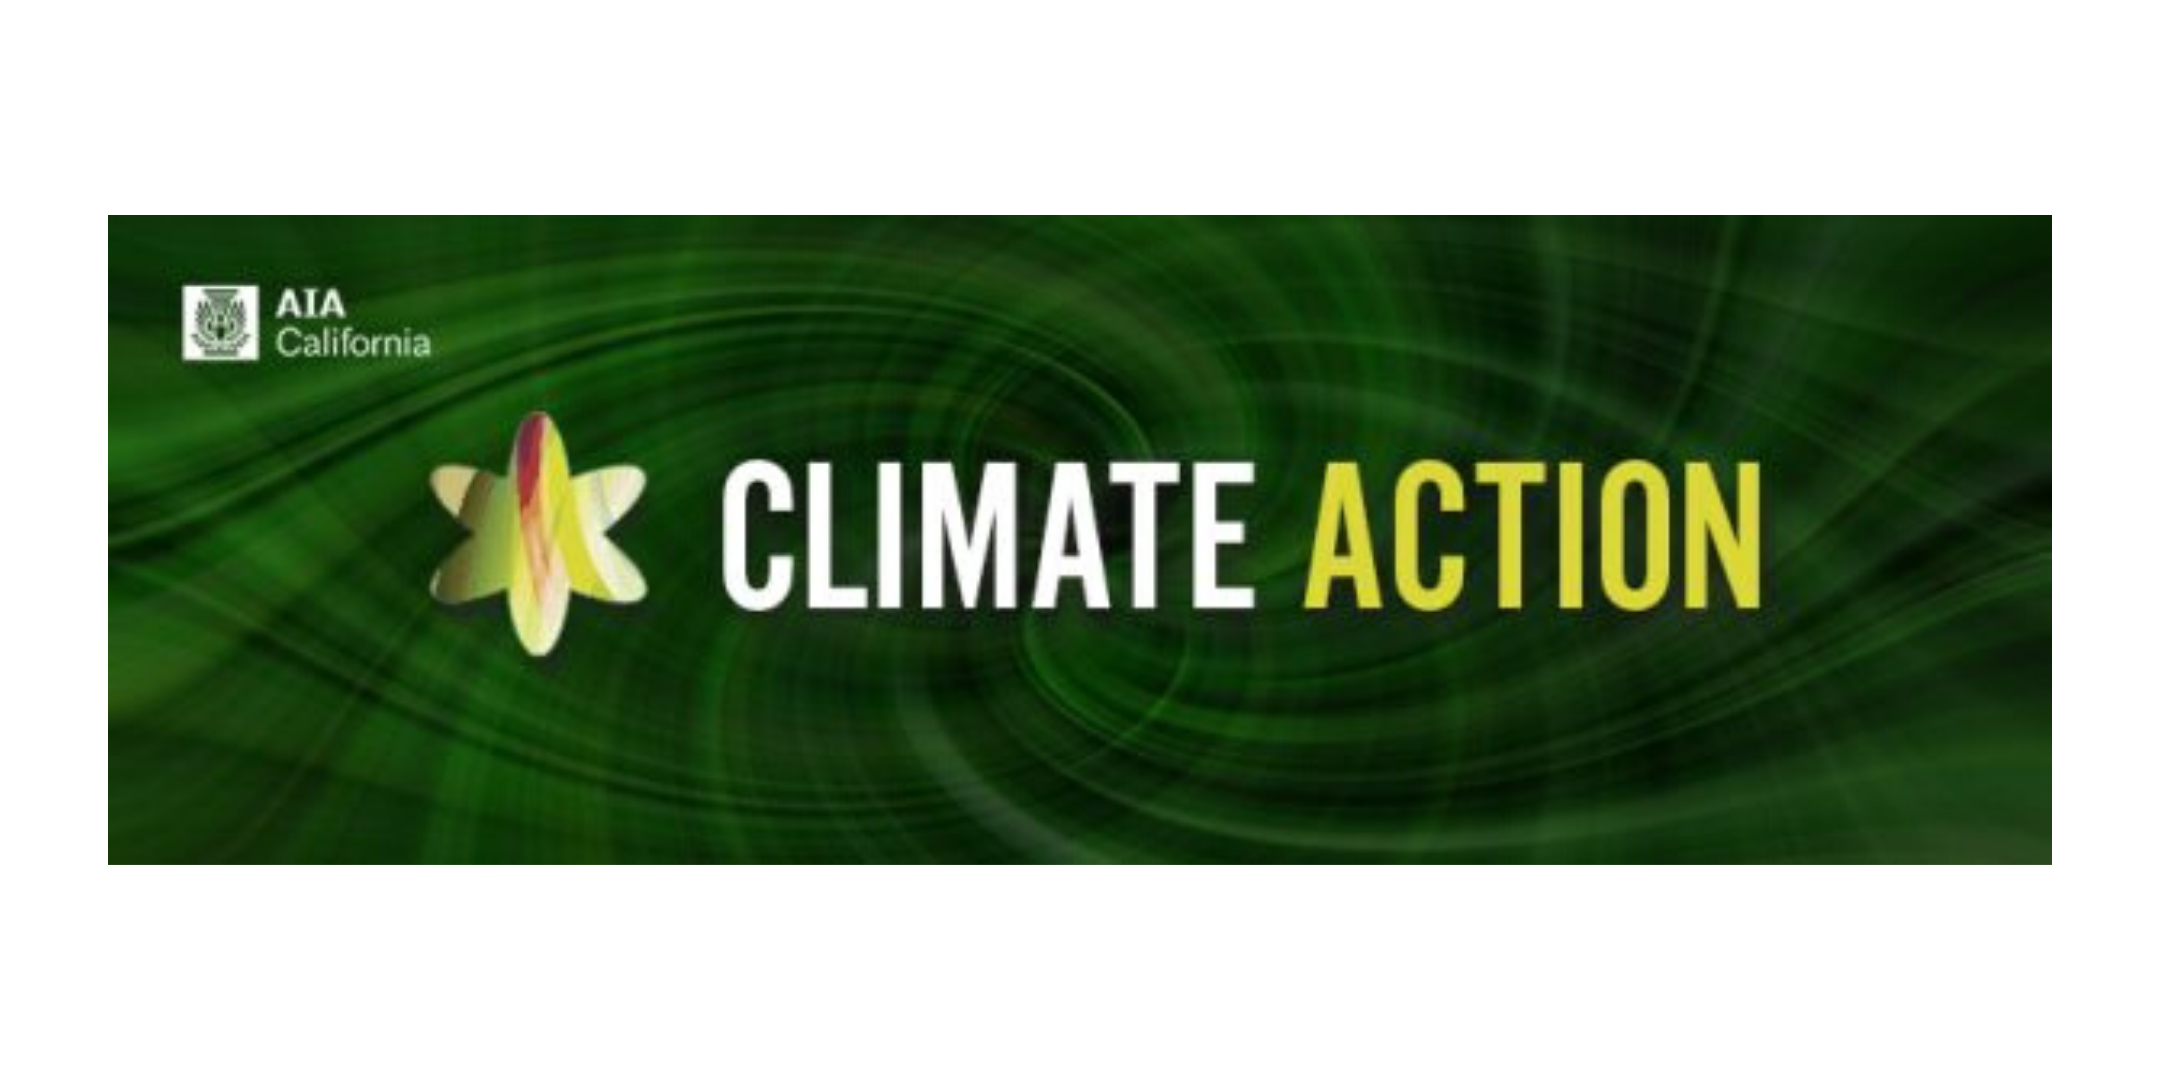 AIA California Climate Action